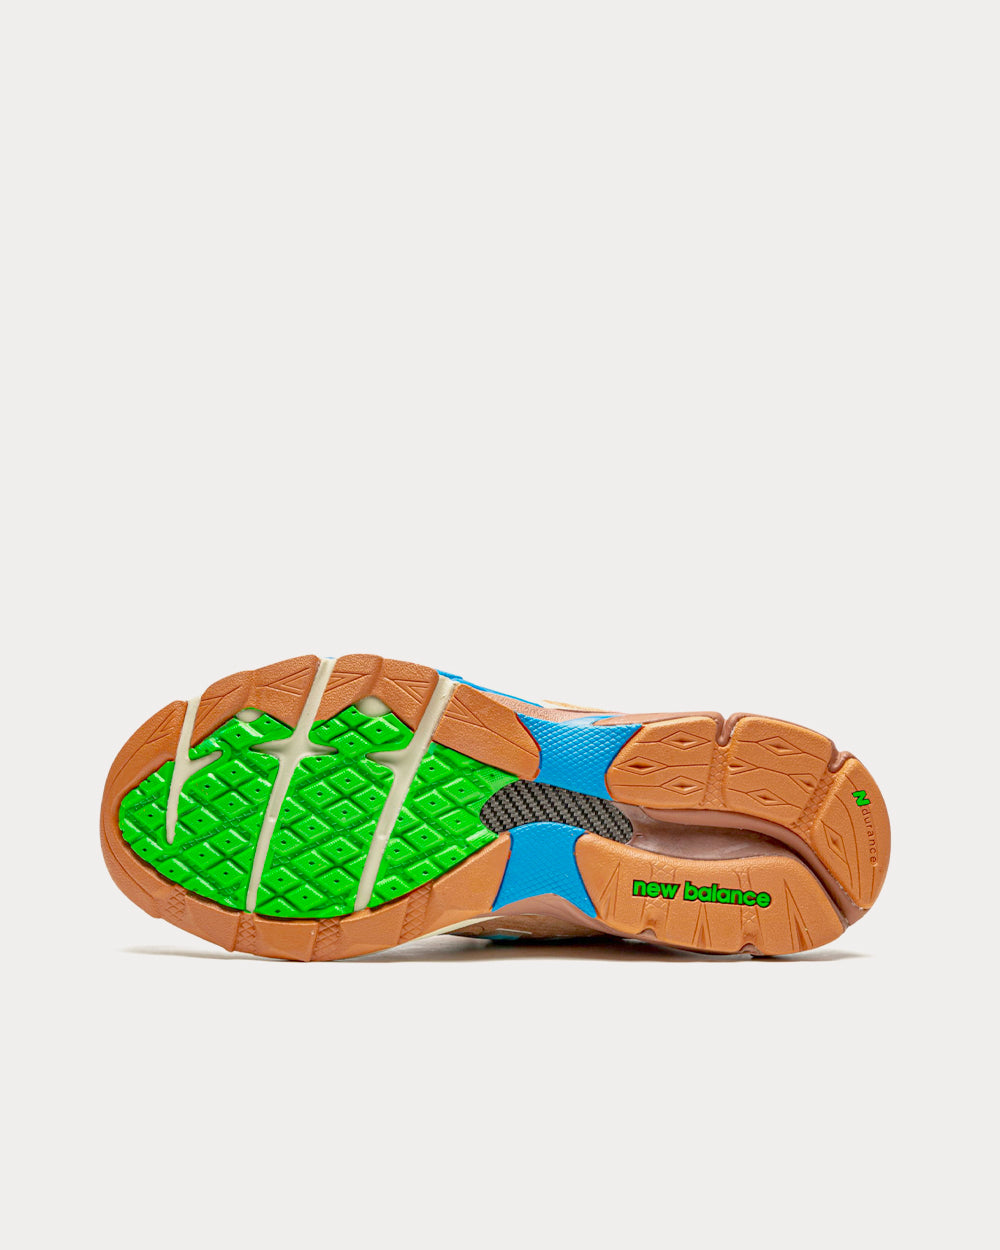 New Balance x Joe Freshgoods - 990V3 Beige / Aqua / Green Low Top Sneakers